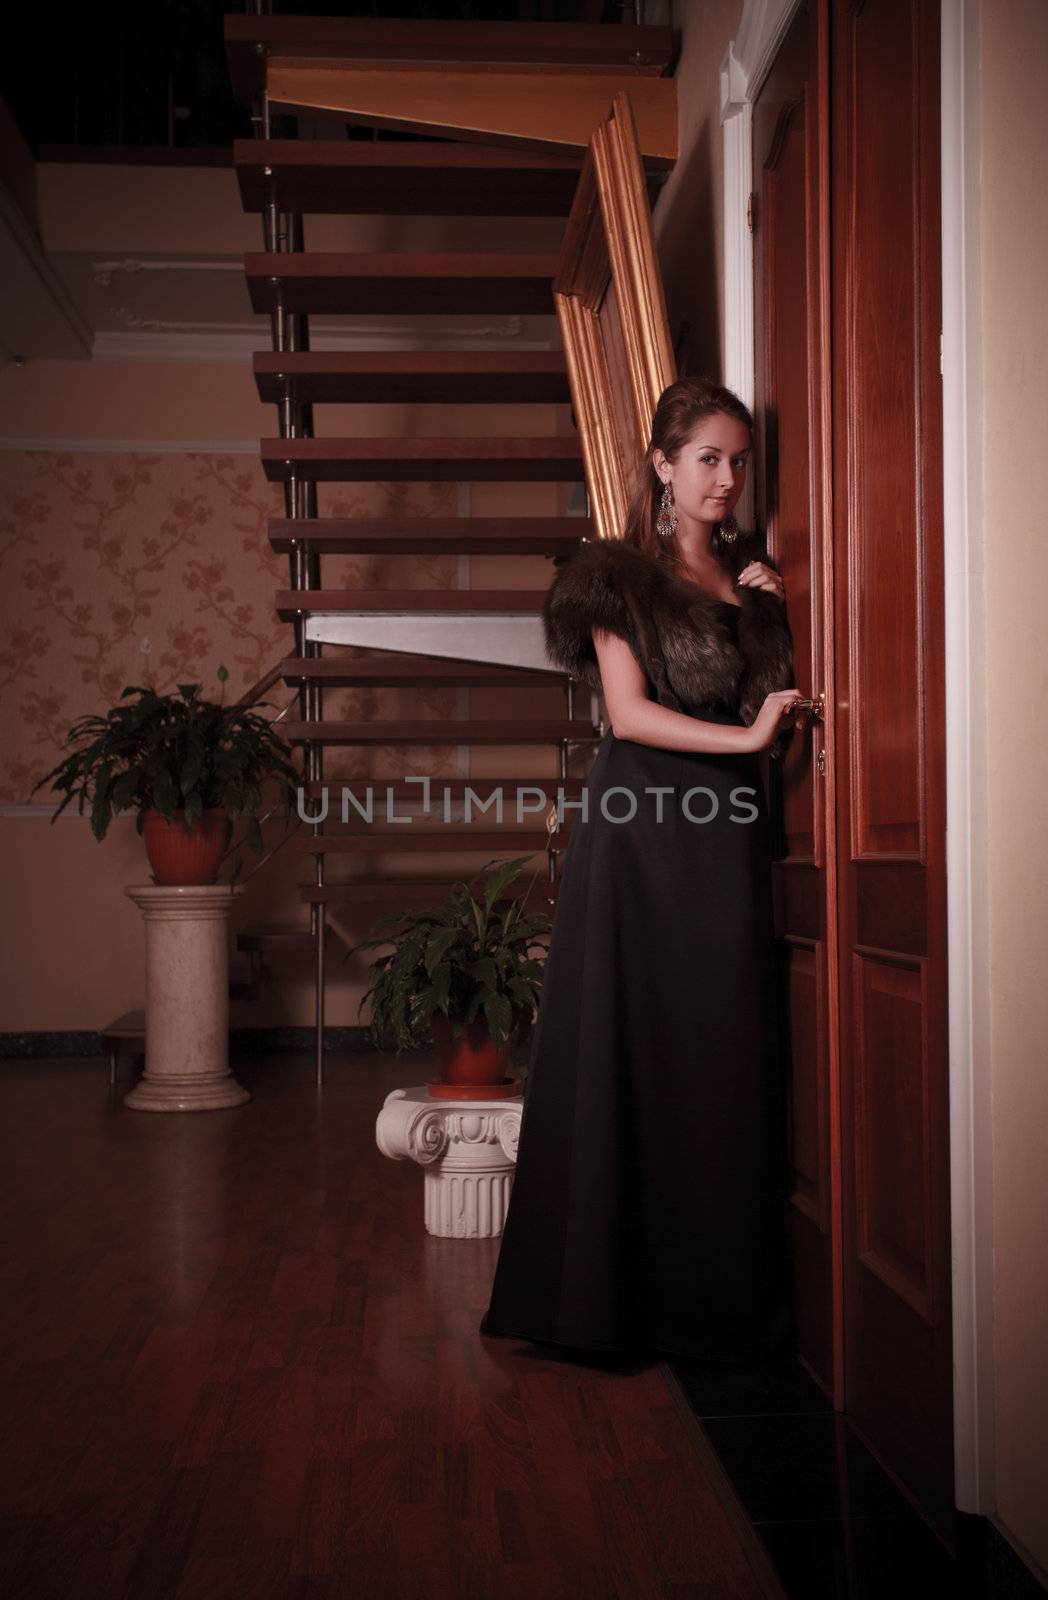 aristocratic lady eavesdropping near closed door